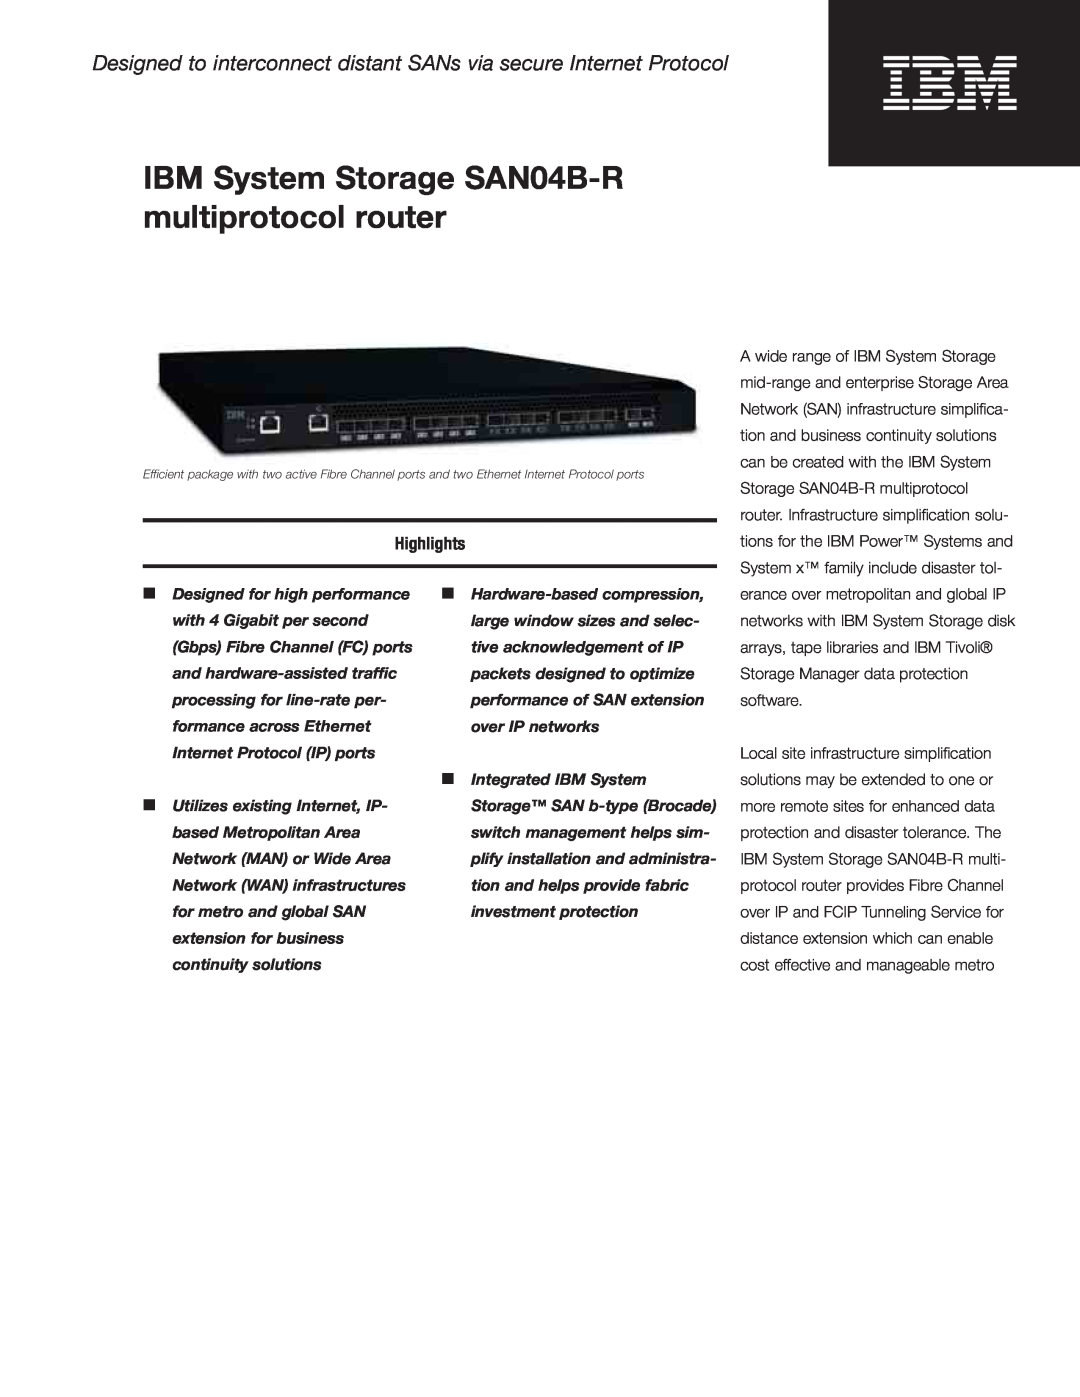 IBM SAN24B-R manual Highlights, IBM System Storage SAN04B-R multiprotocol router 